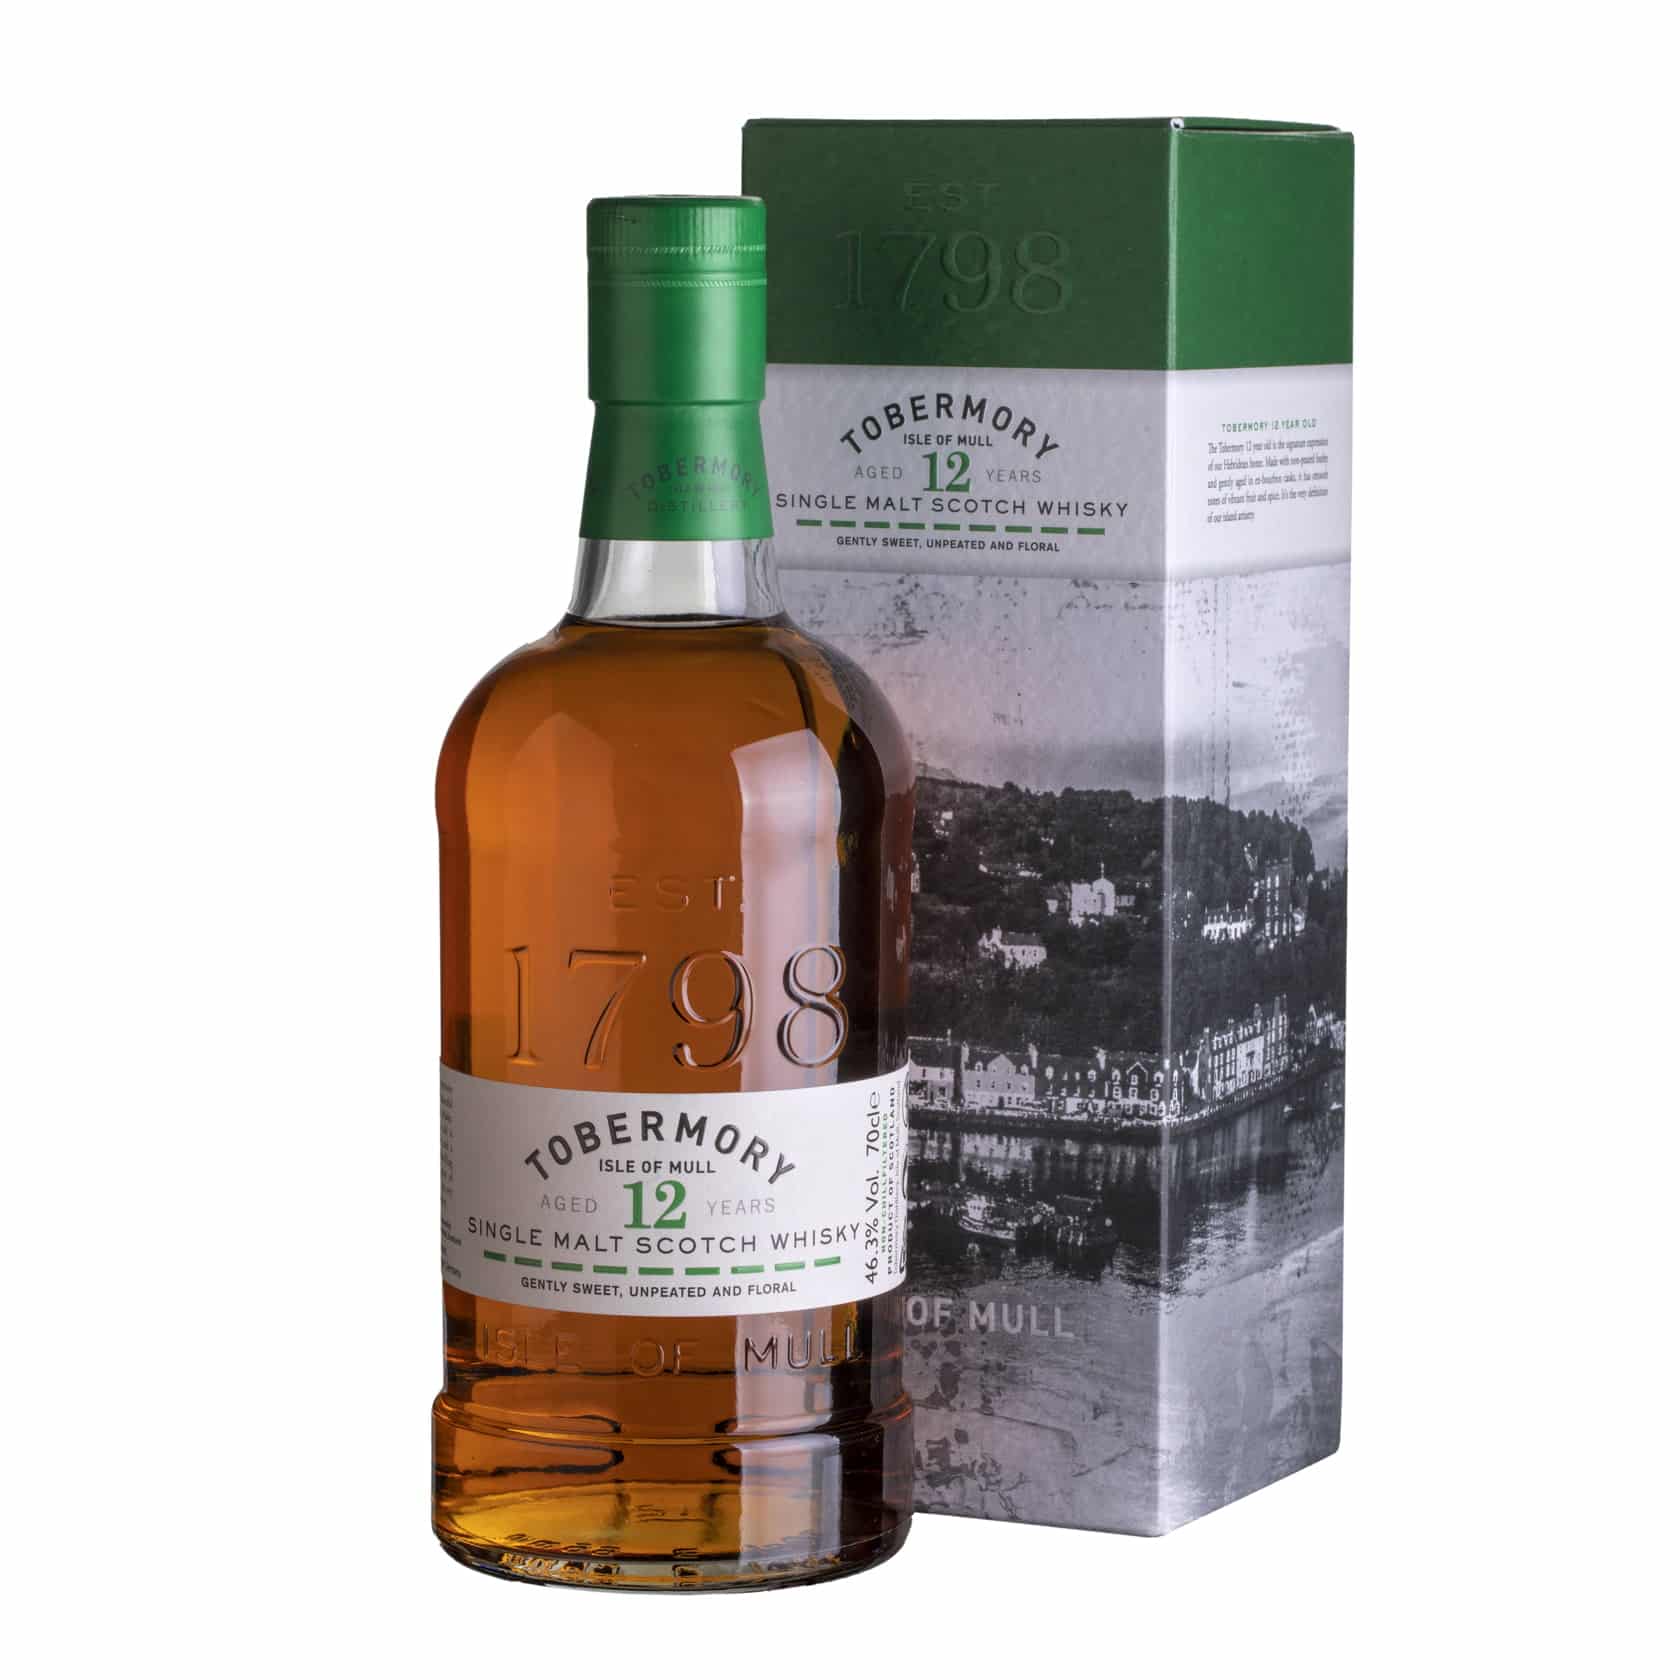 12 Whisky Enoteca Isle Mull Single • 46.3% Madrid of Malt Barolo YO Tobermory